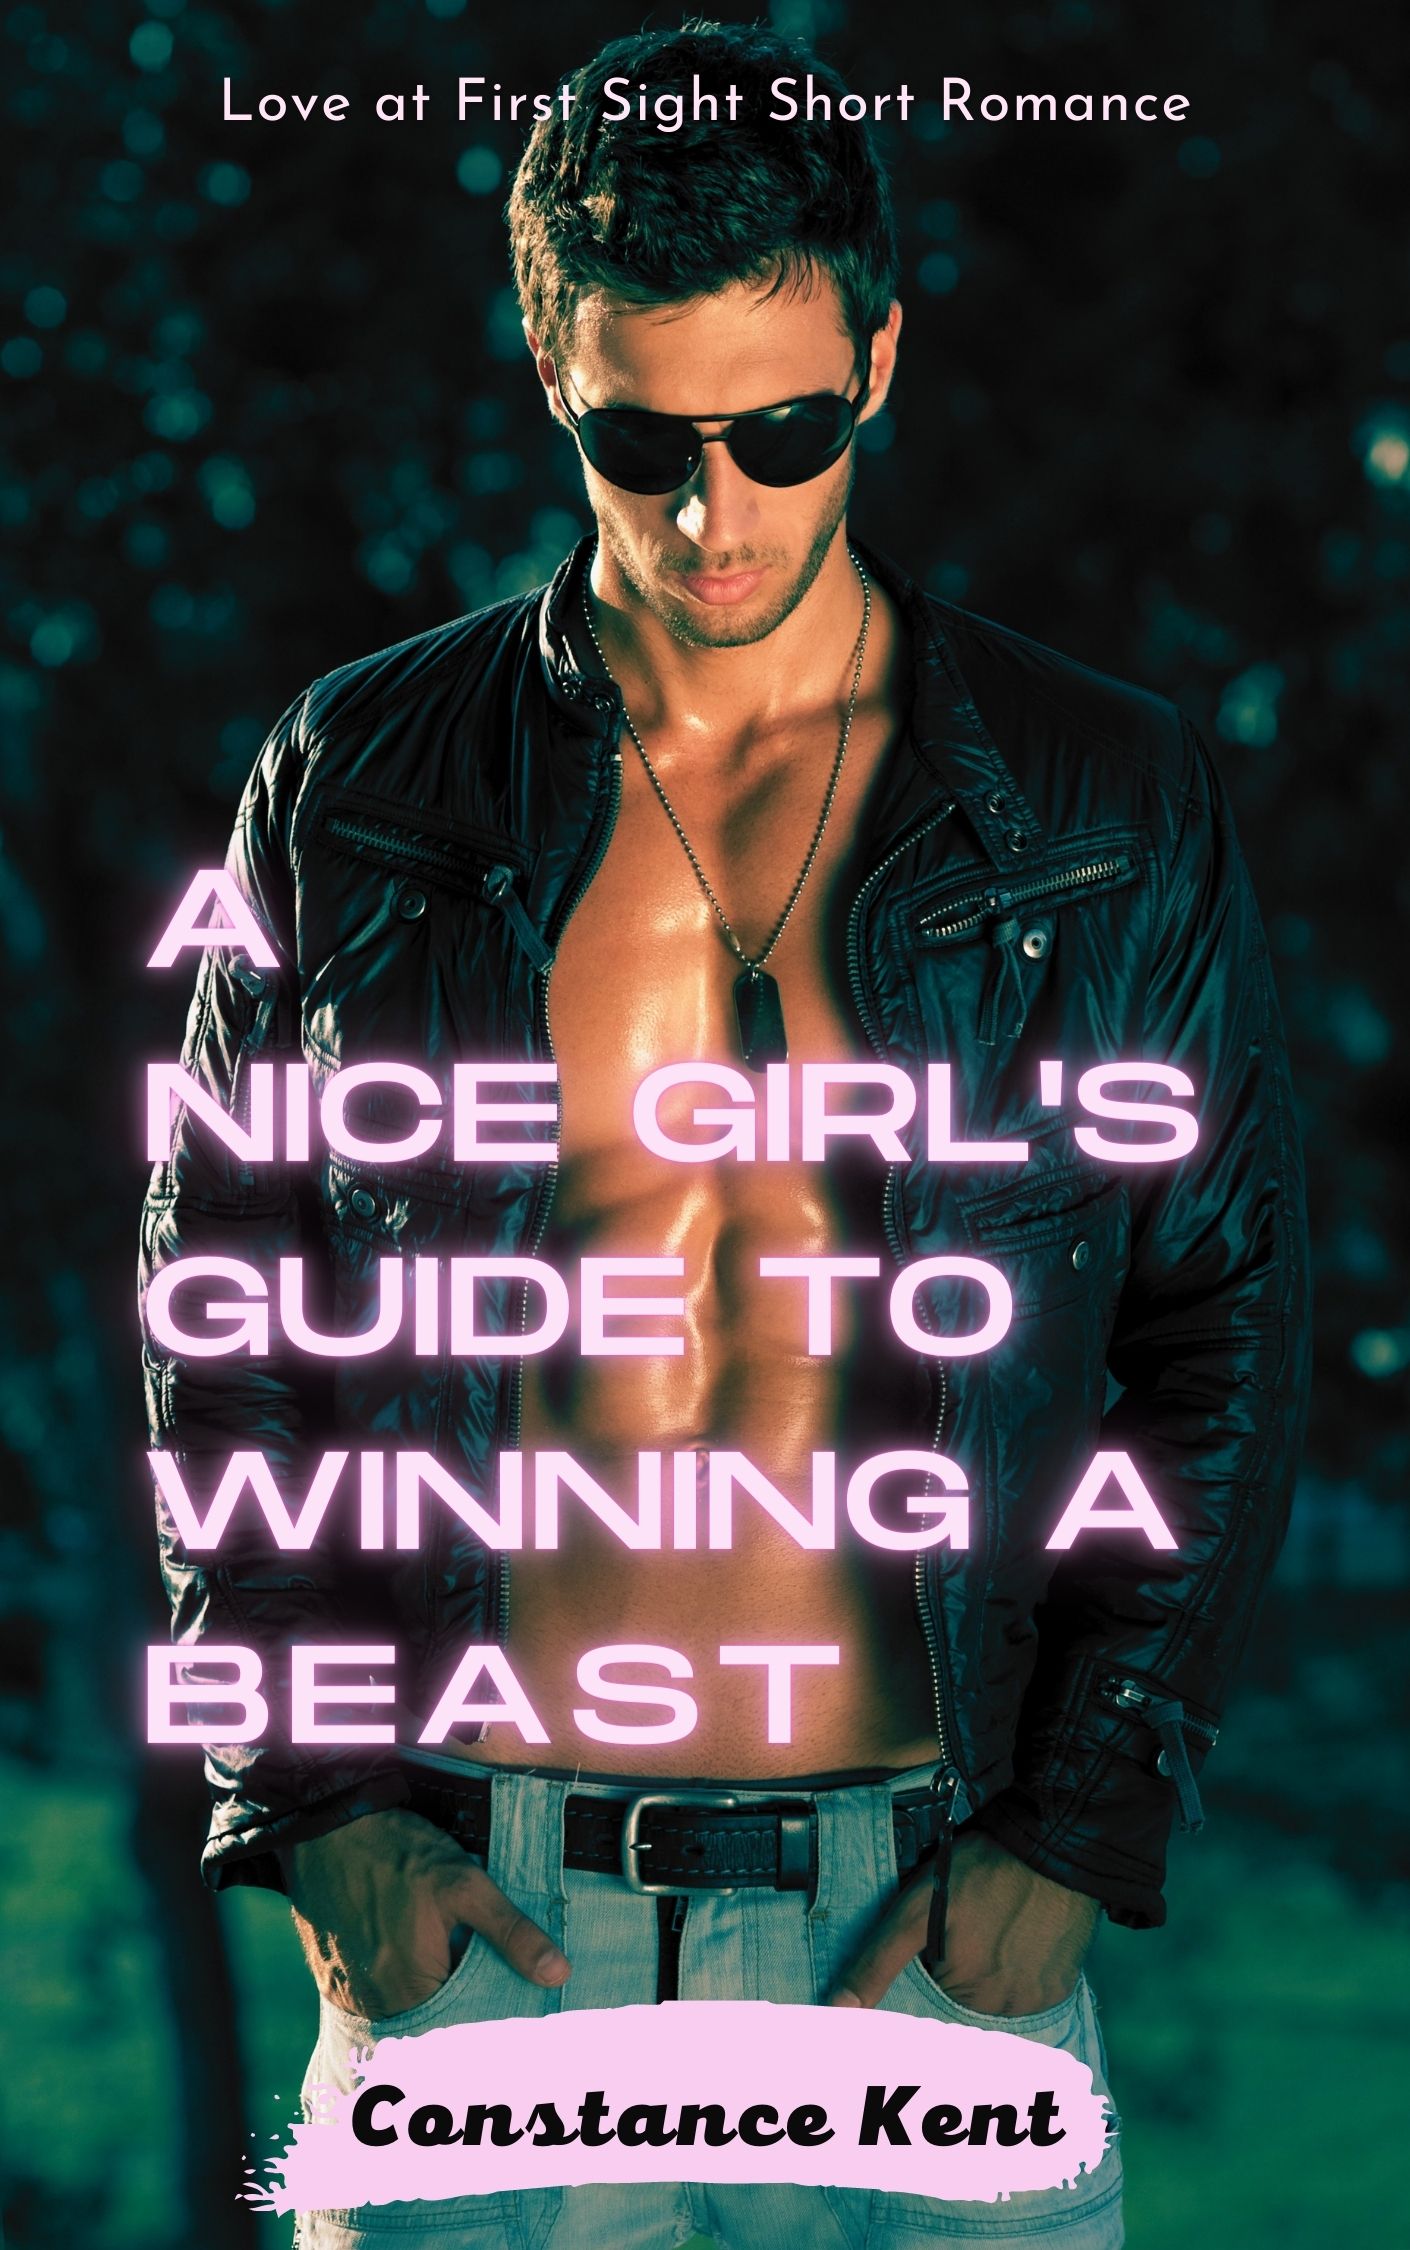 A Nice Girl's Guide to Winning a Beast short romance